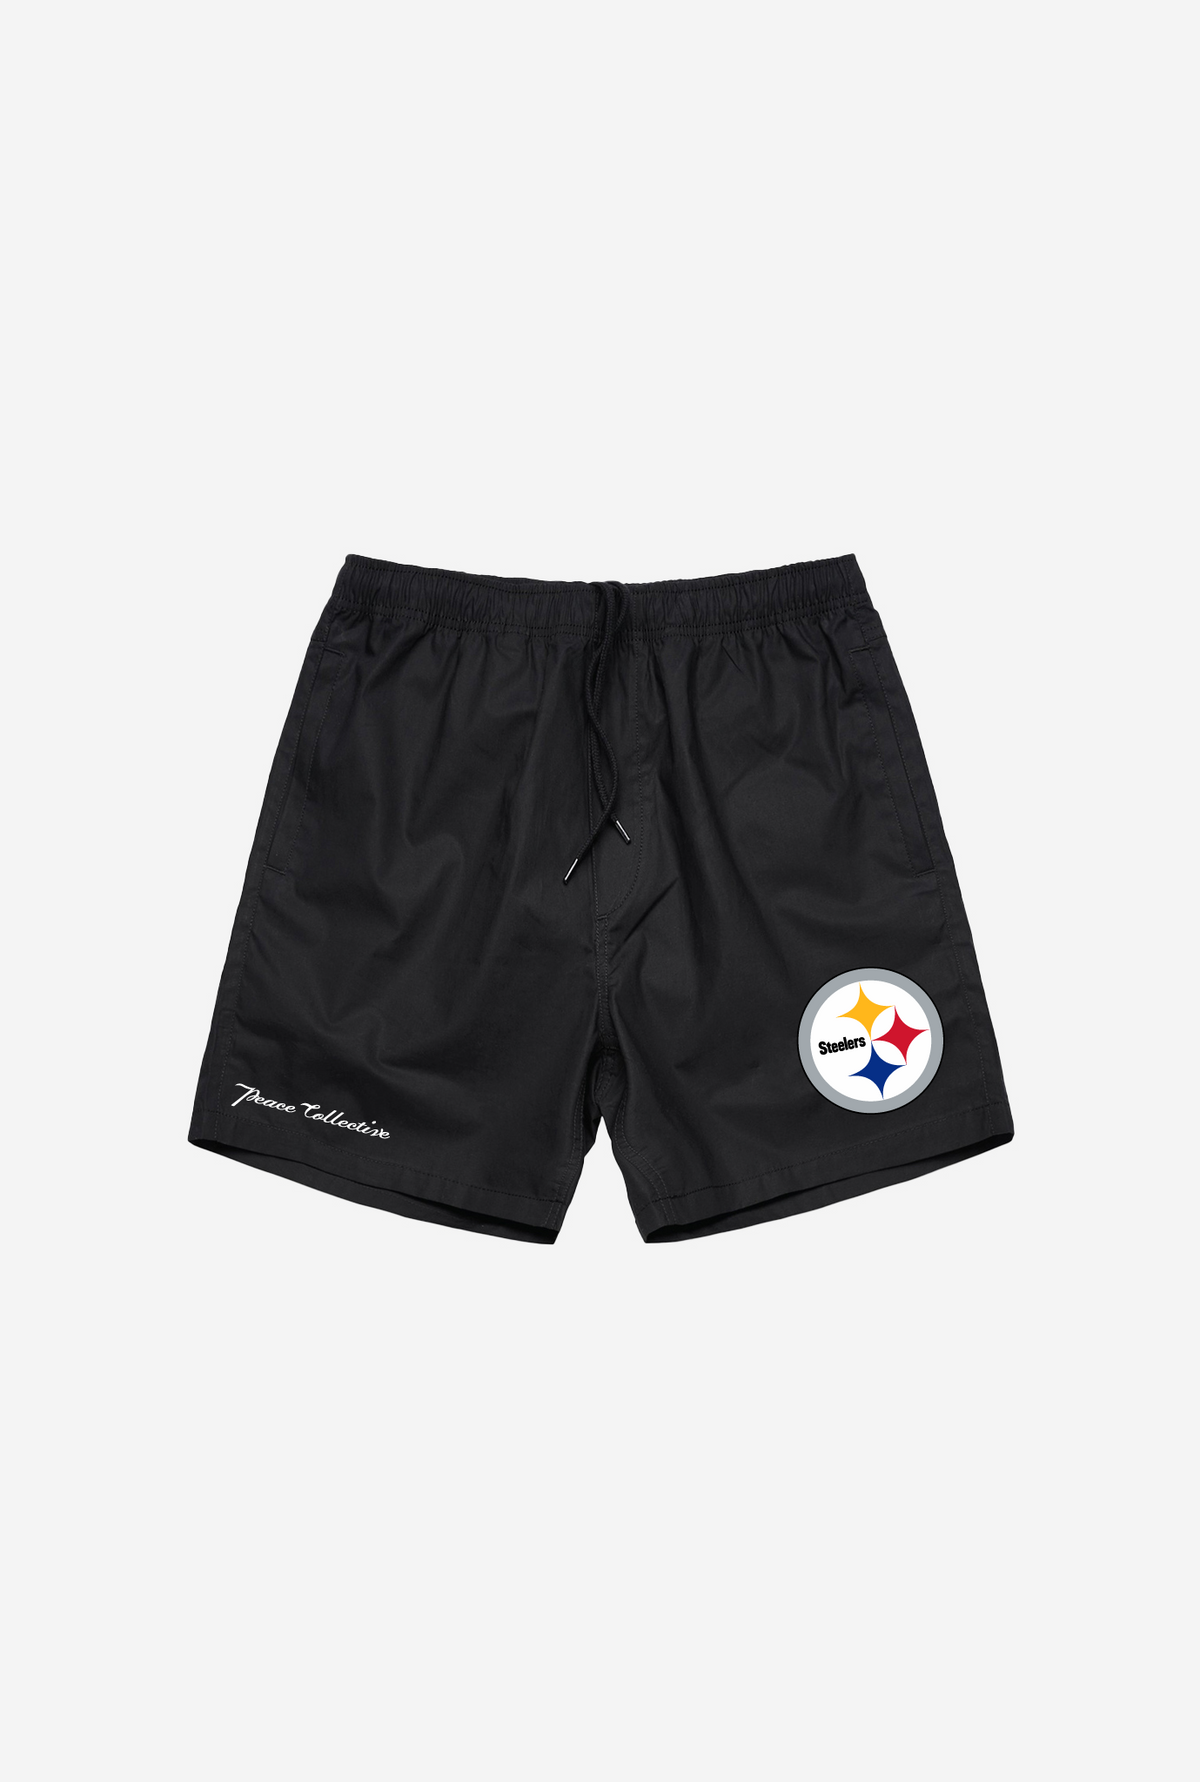 Pittsburgh Steelers Shorts - Black